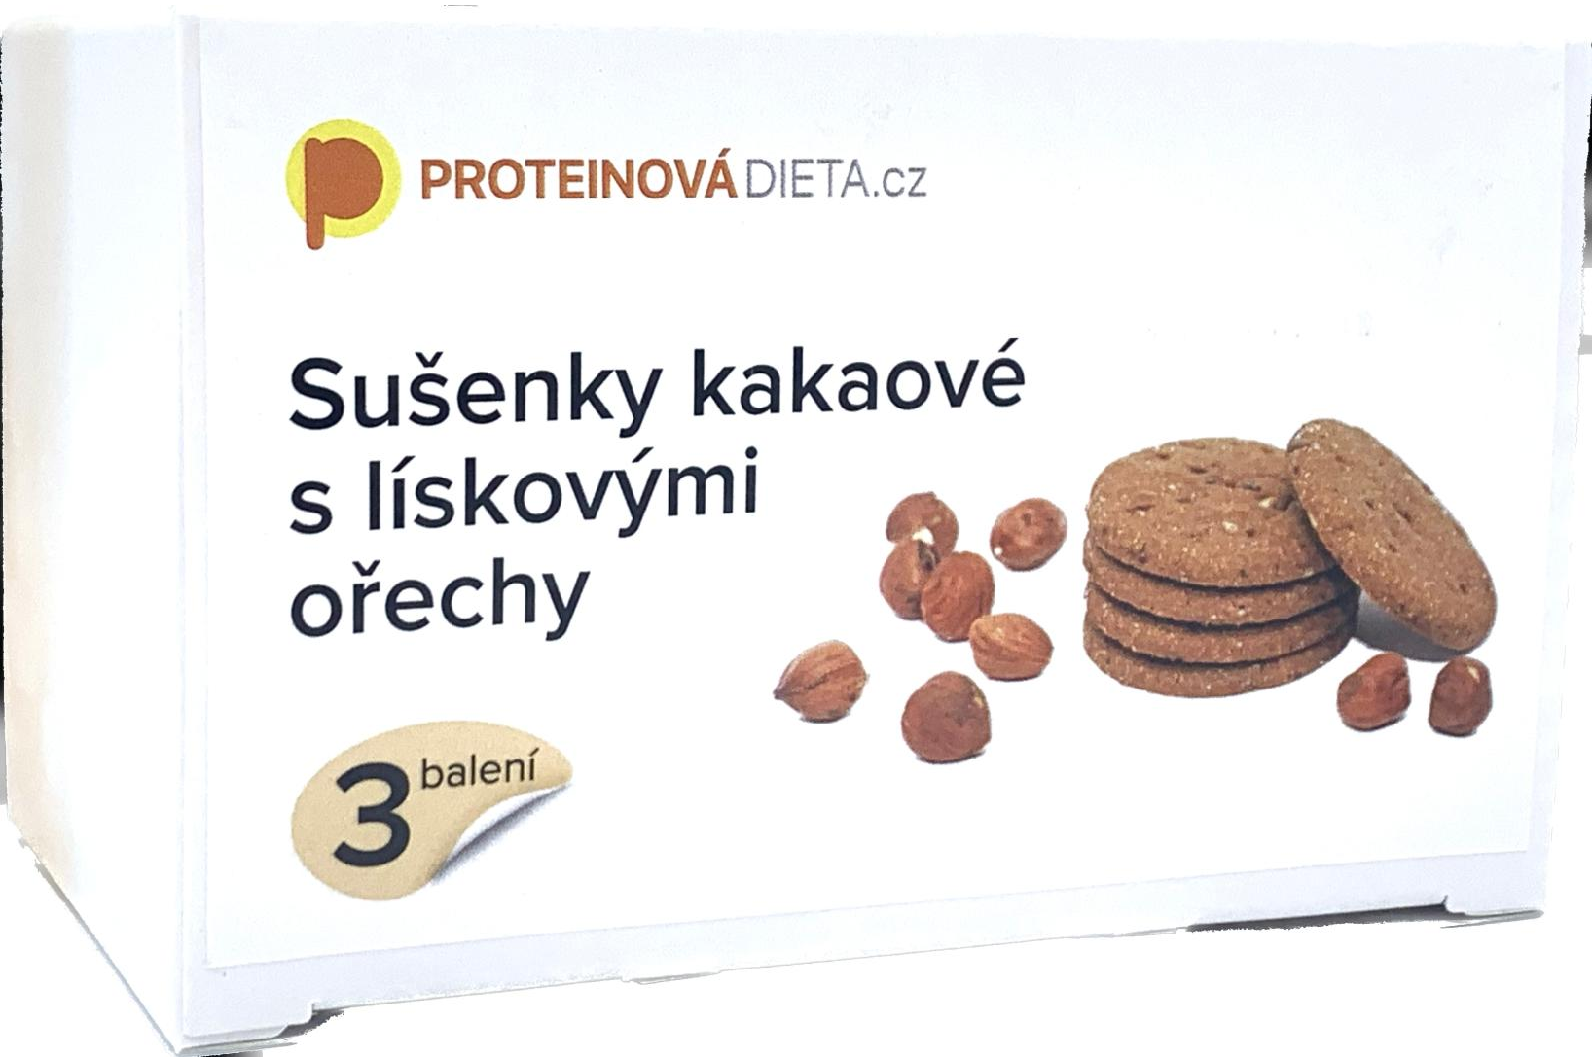 Proteinová Dieta Sušenky KAKAOVÉ s lískovými ořechy (3 balení)